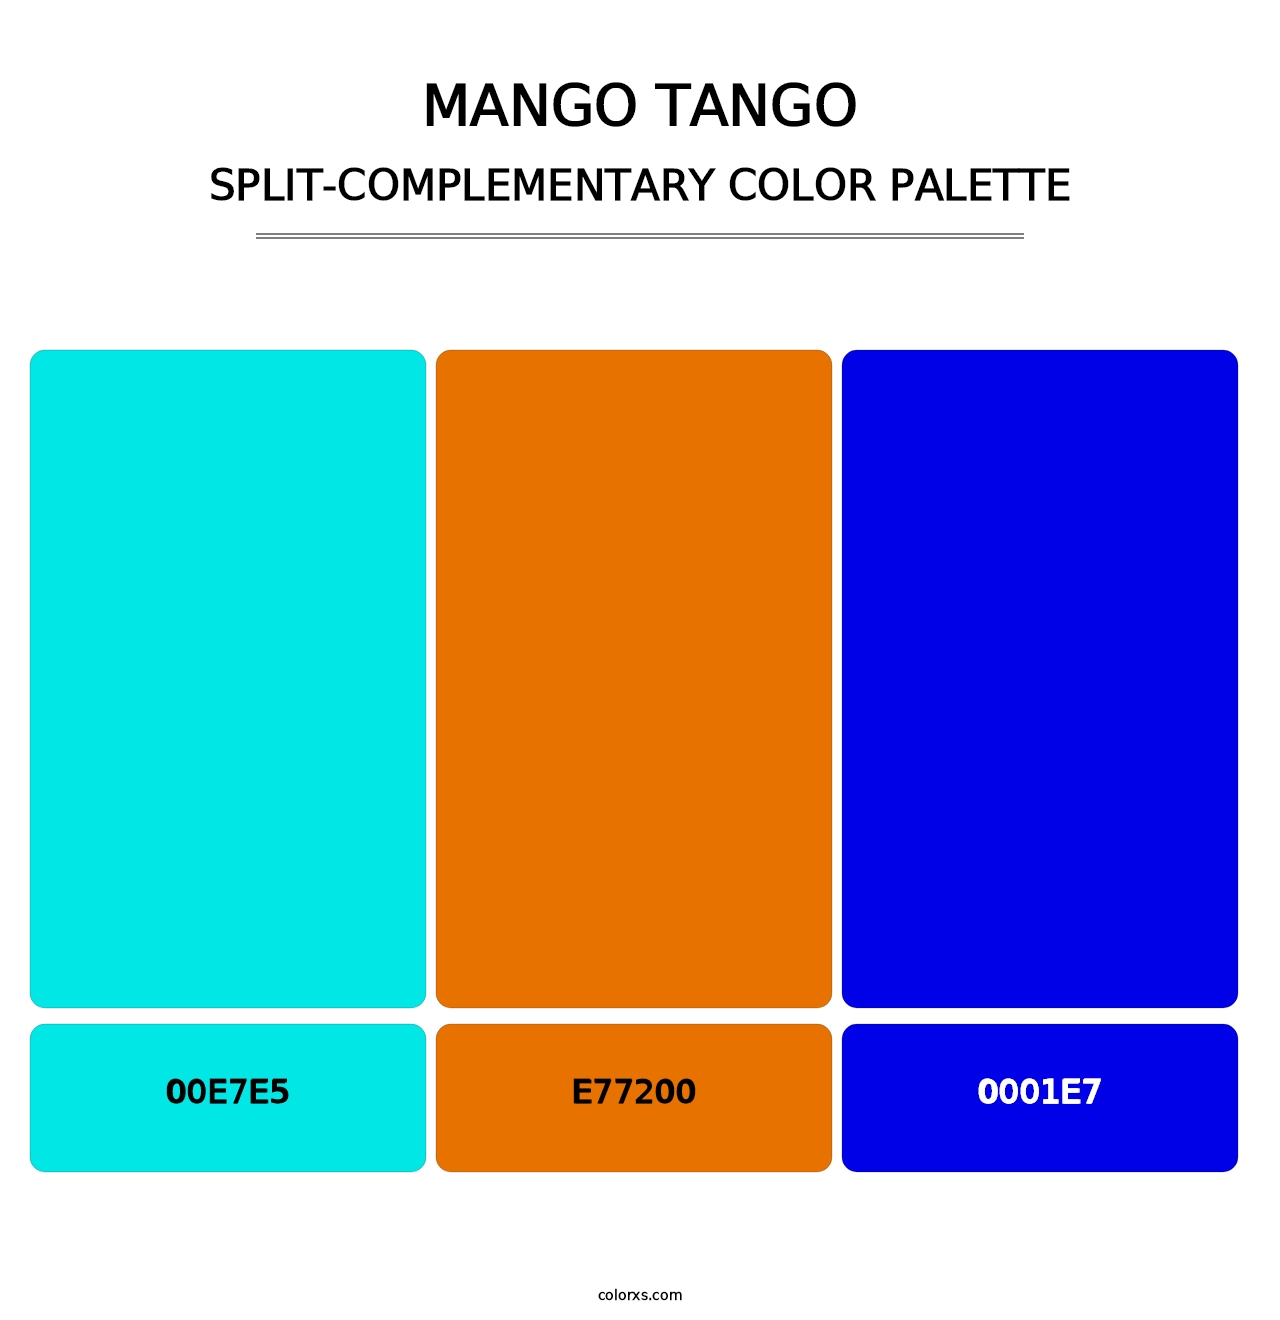 Mango Tango - Split-Complementary Color Palette